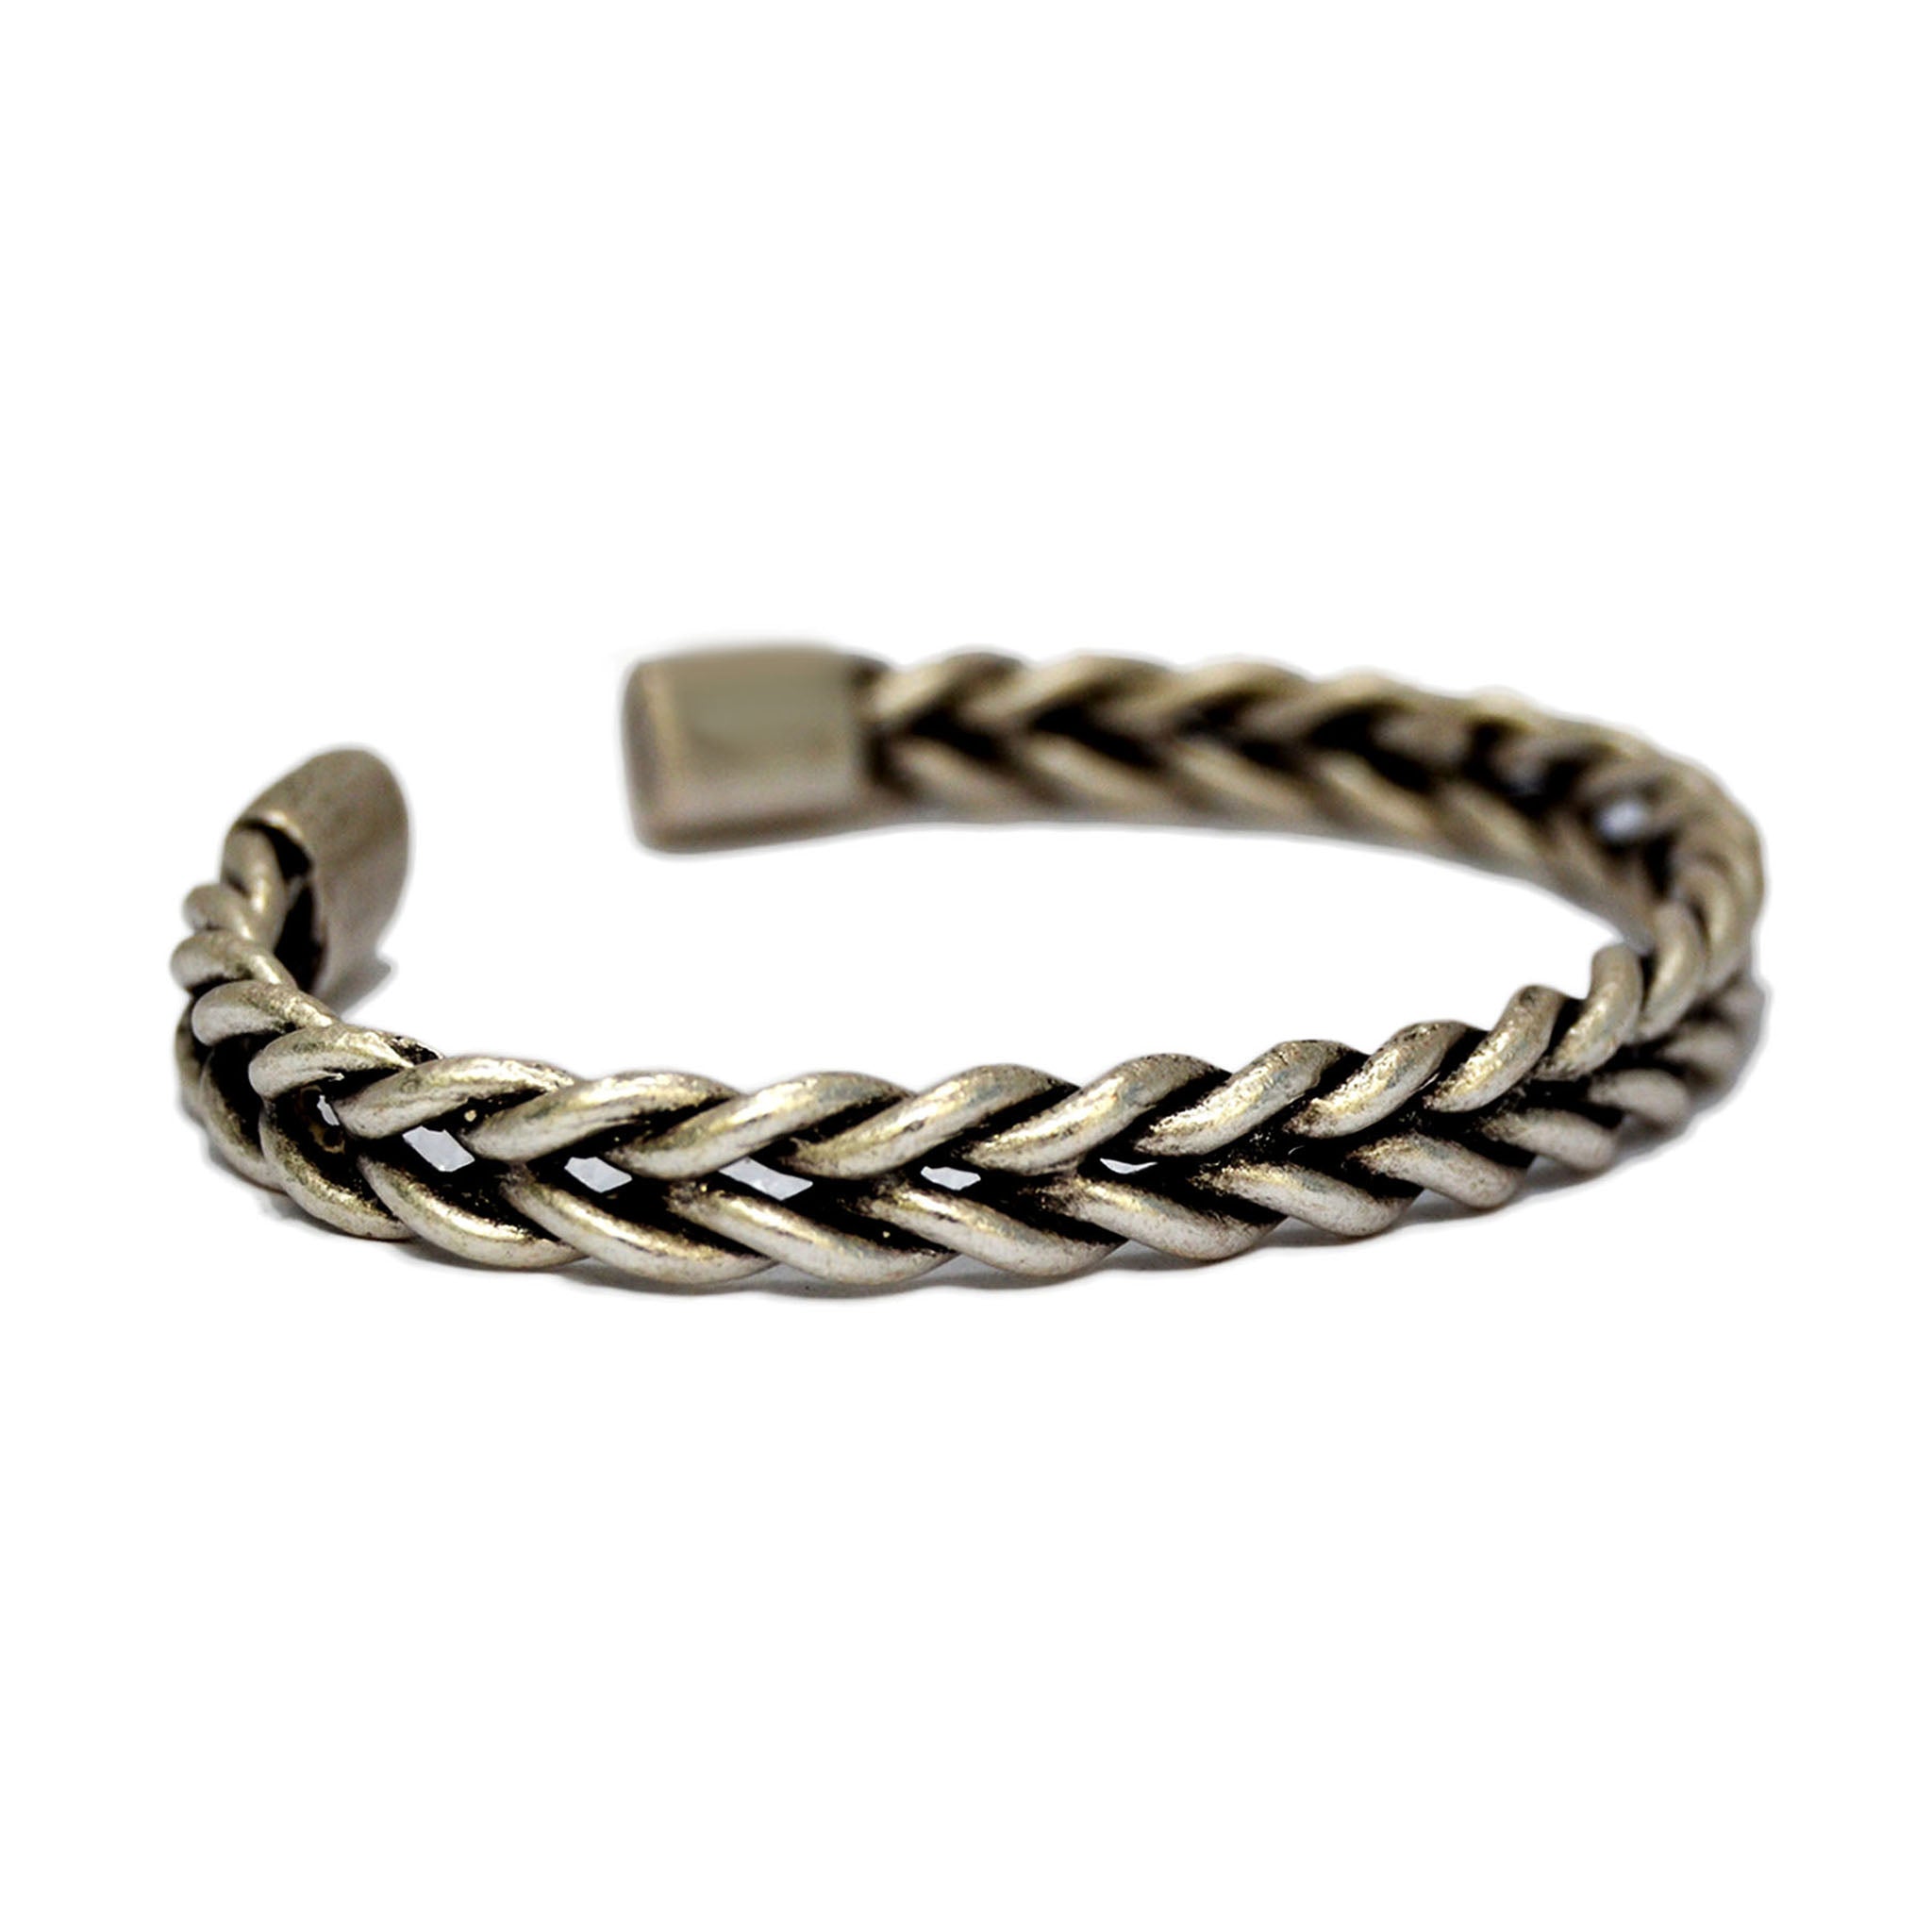 Braided cuff bracelet